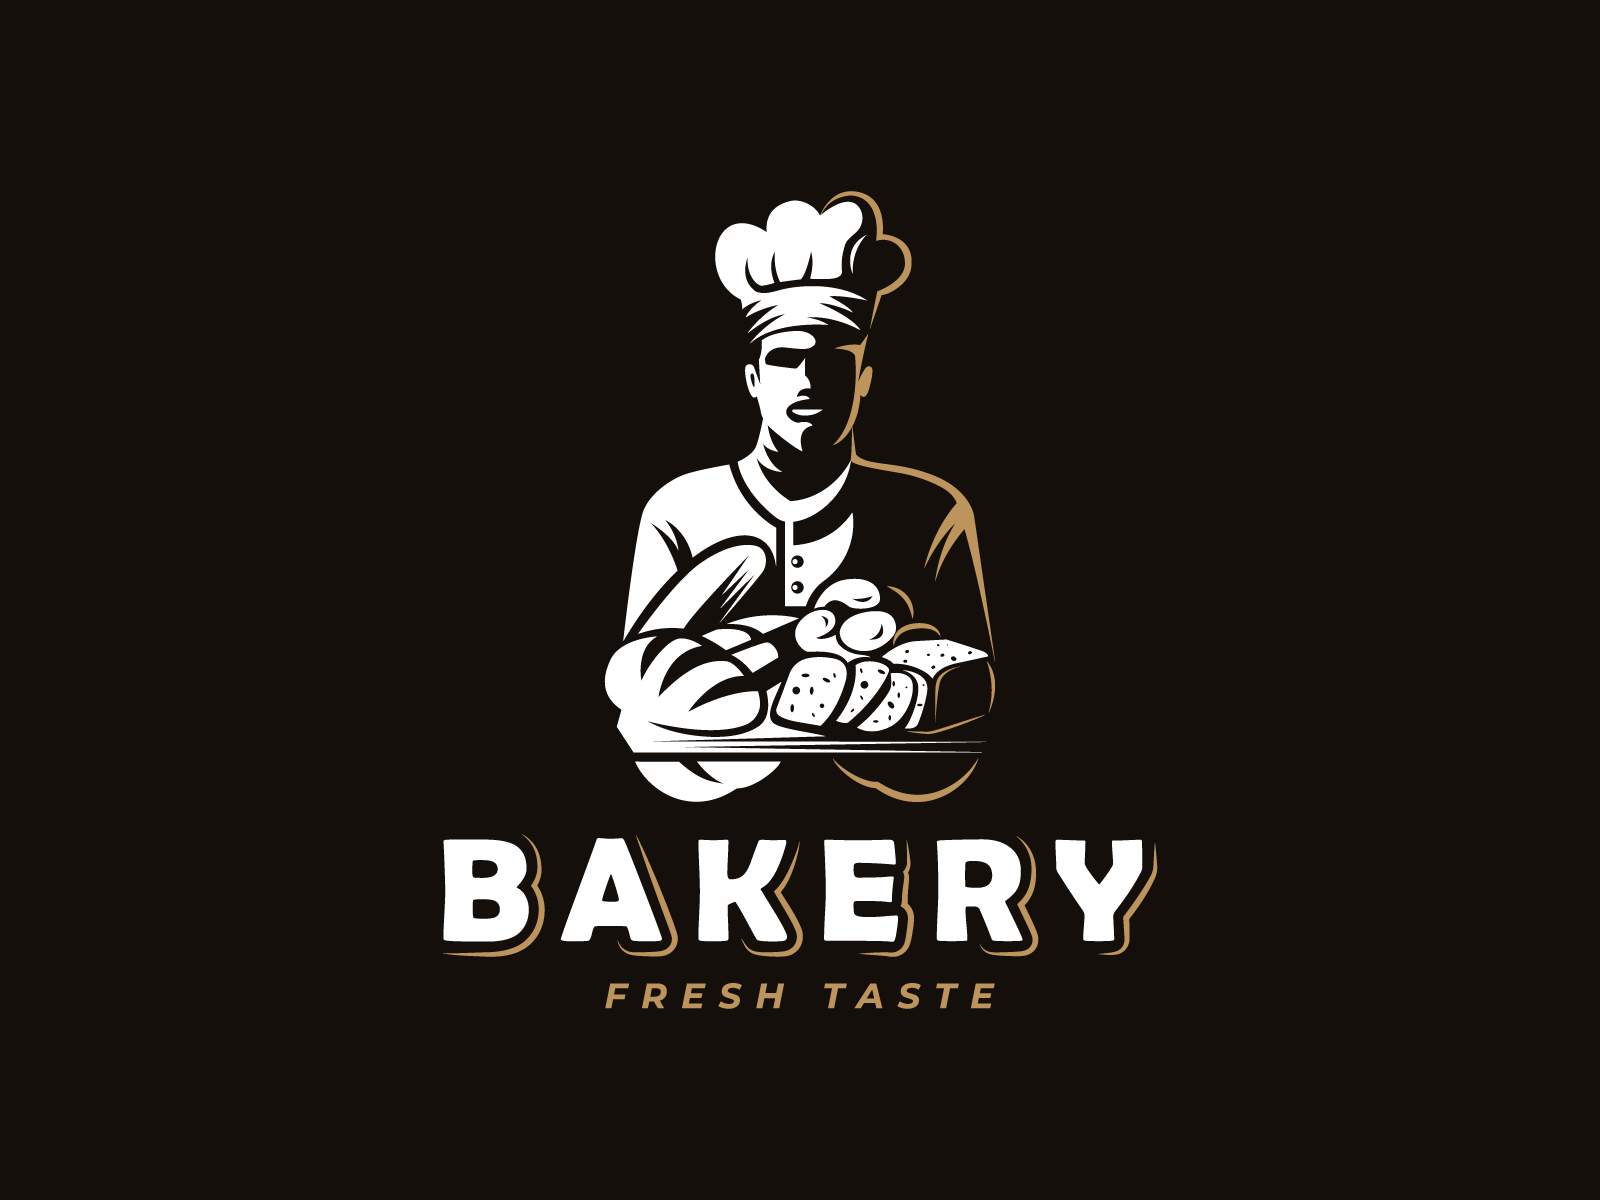 Bakery Logo by Israfil Shawn on Dribbble